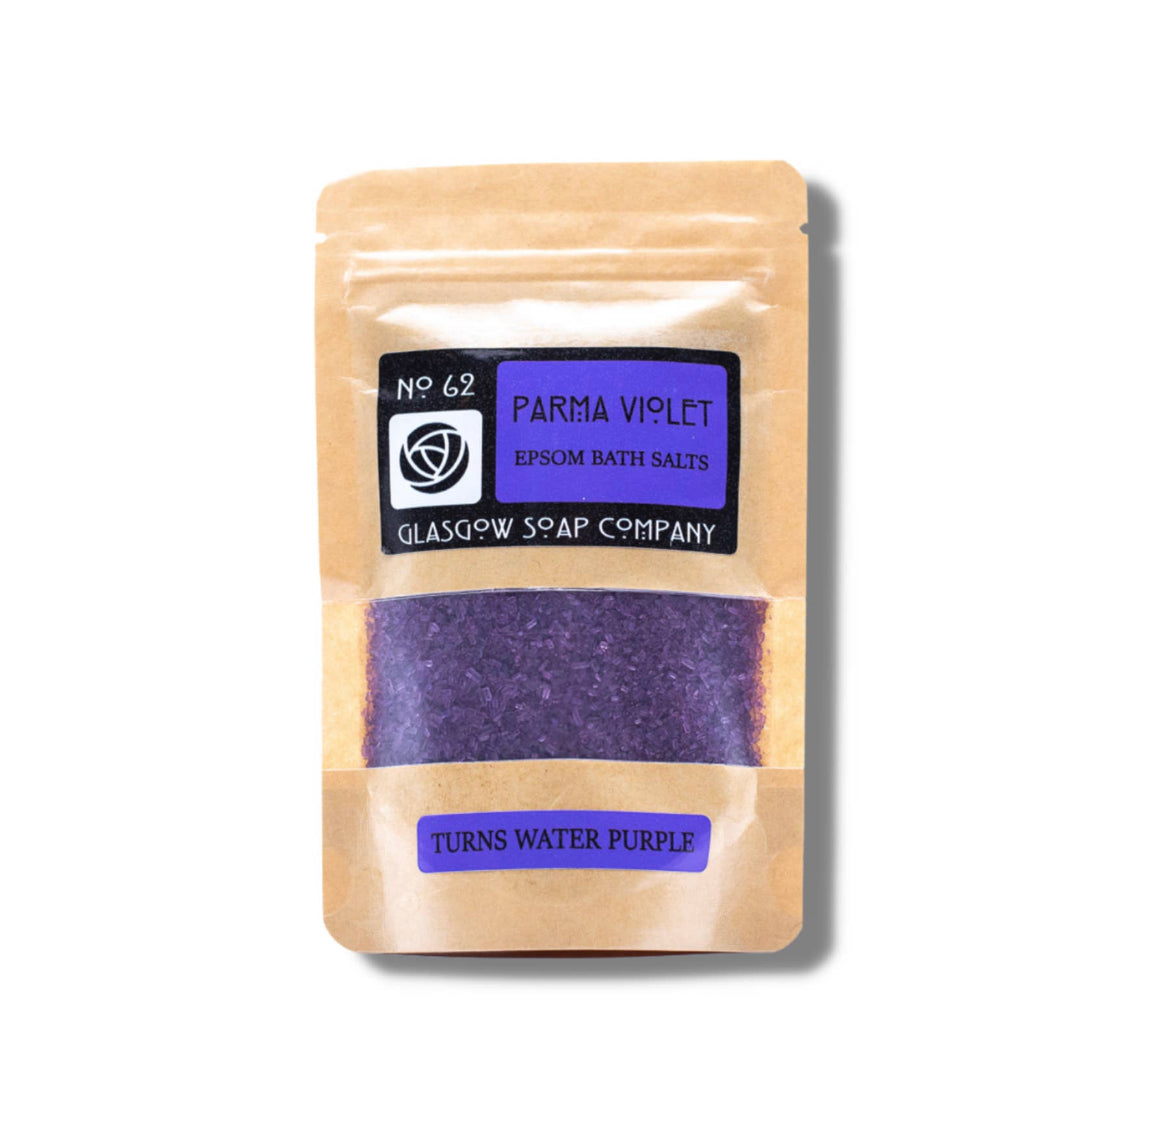 Parma Violet Epsom Bath Salts